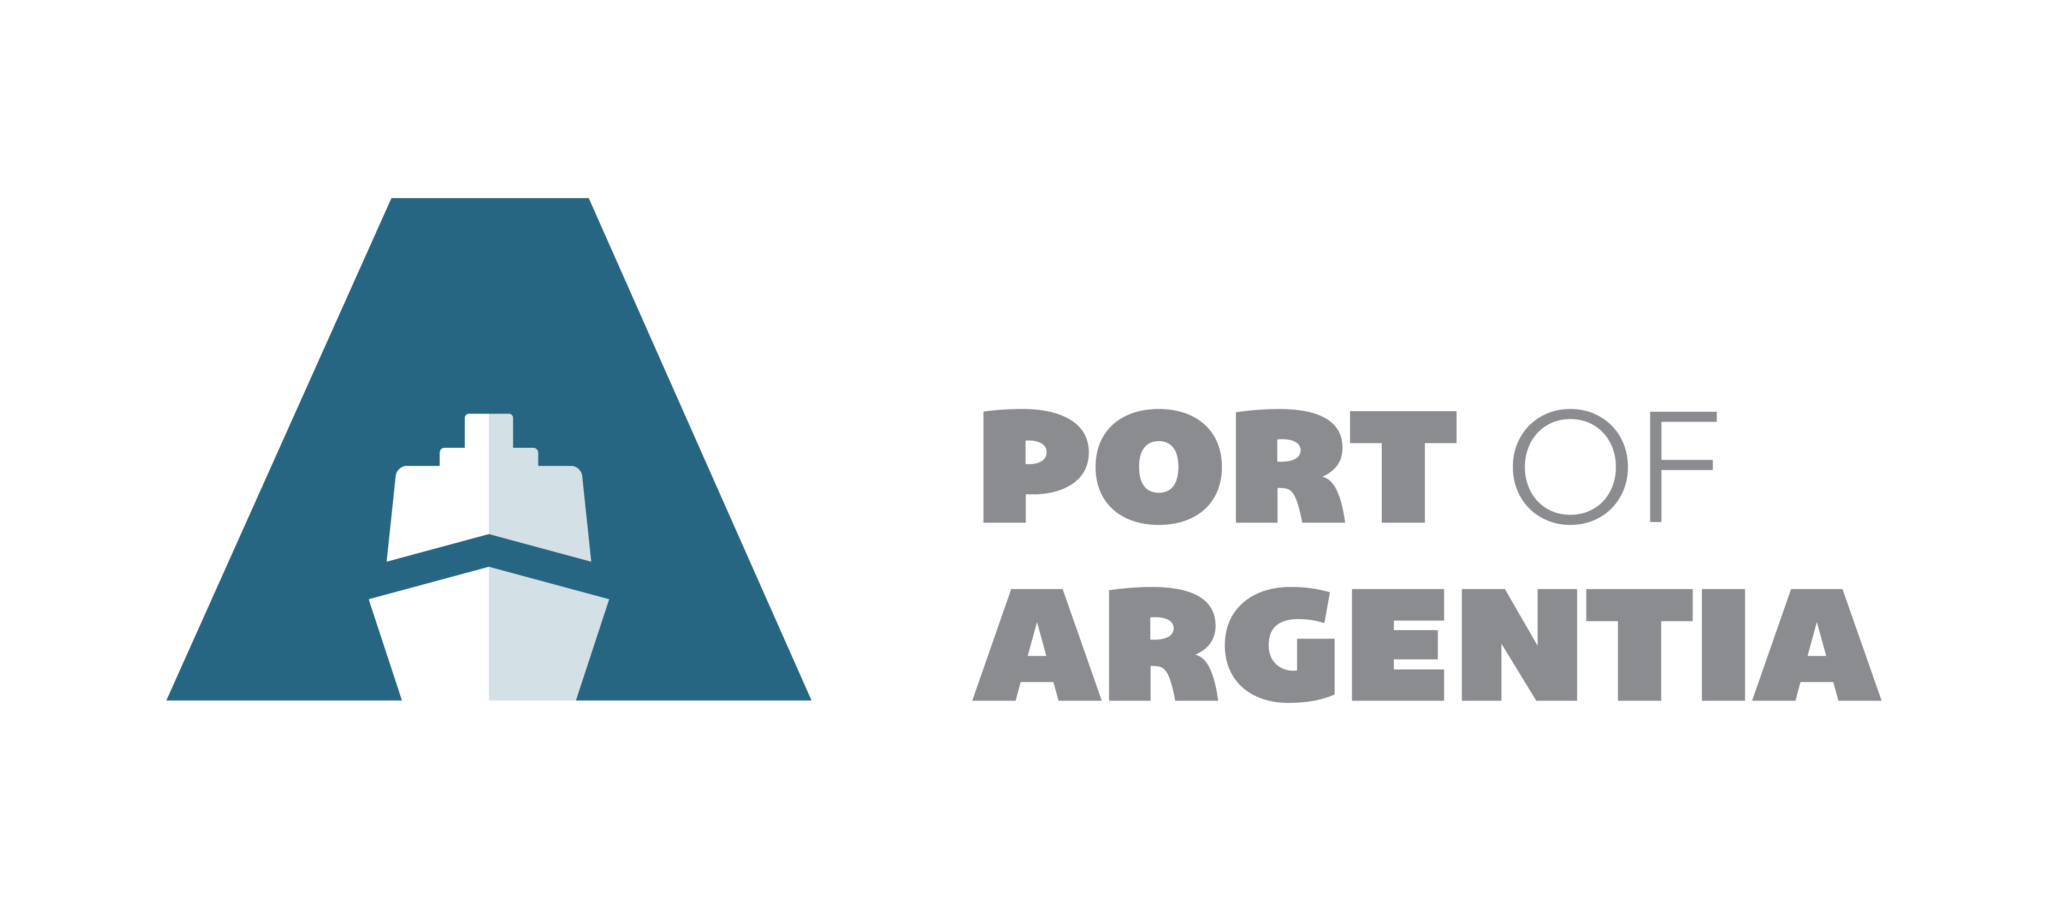 About the Port of Argentia | Newfoundland Labrador